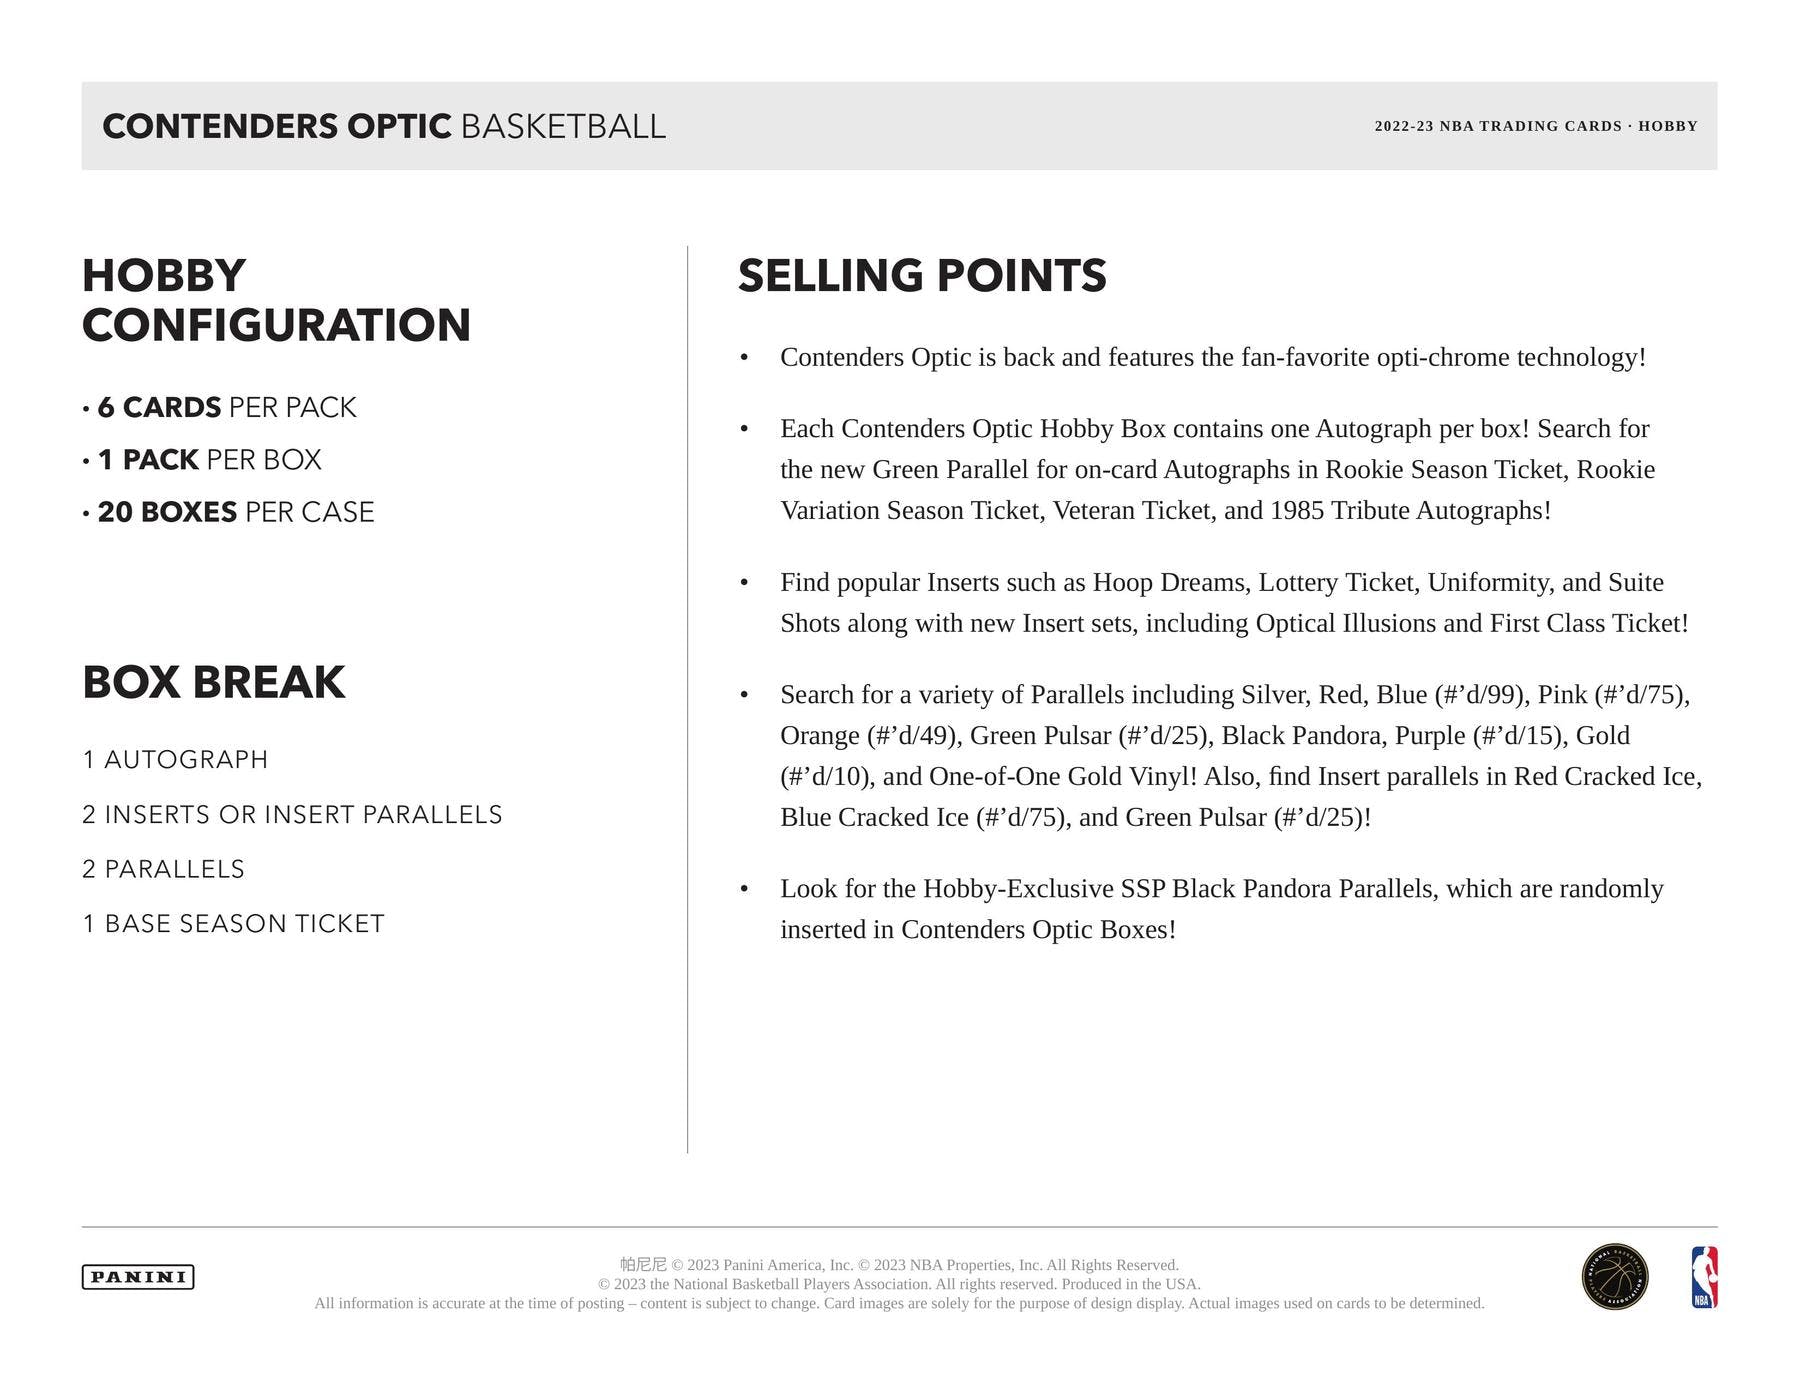 2022-23 Panini Contenders Optic Basketball Hobby Box - Miraj Trading